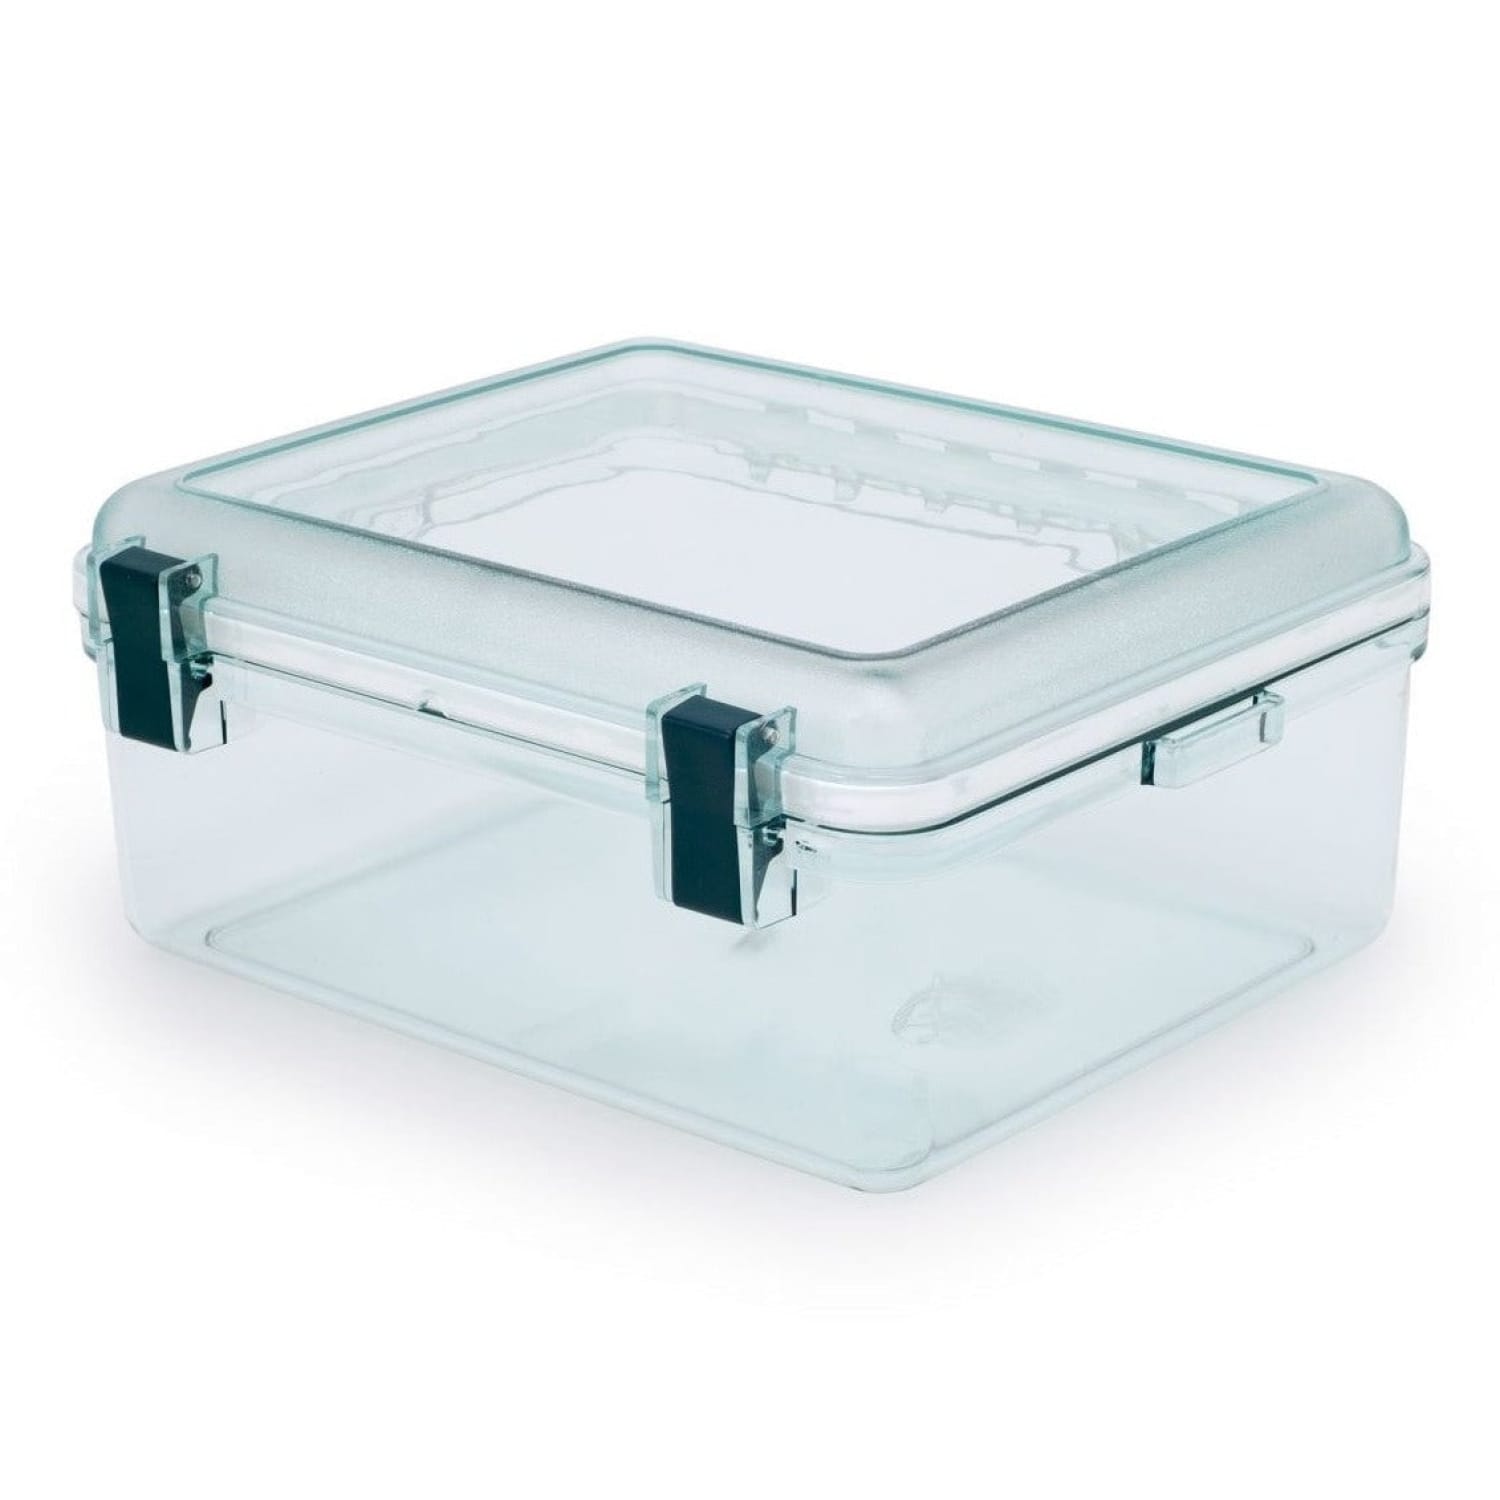 GSI Lexan Gear Box | Waterproof & Durable large